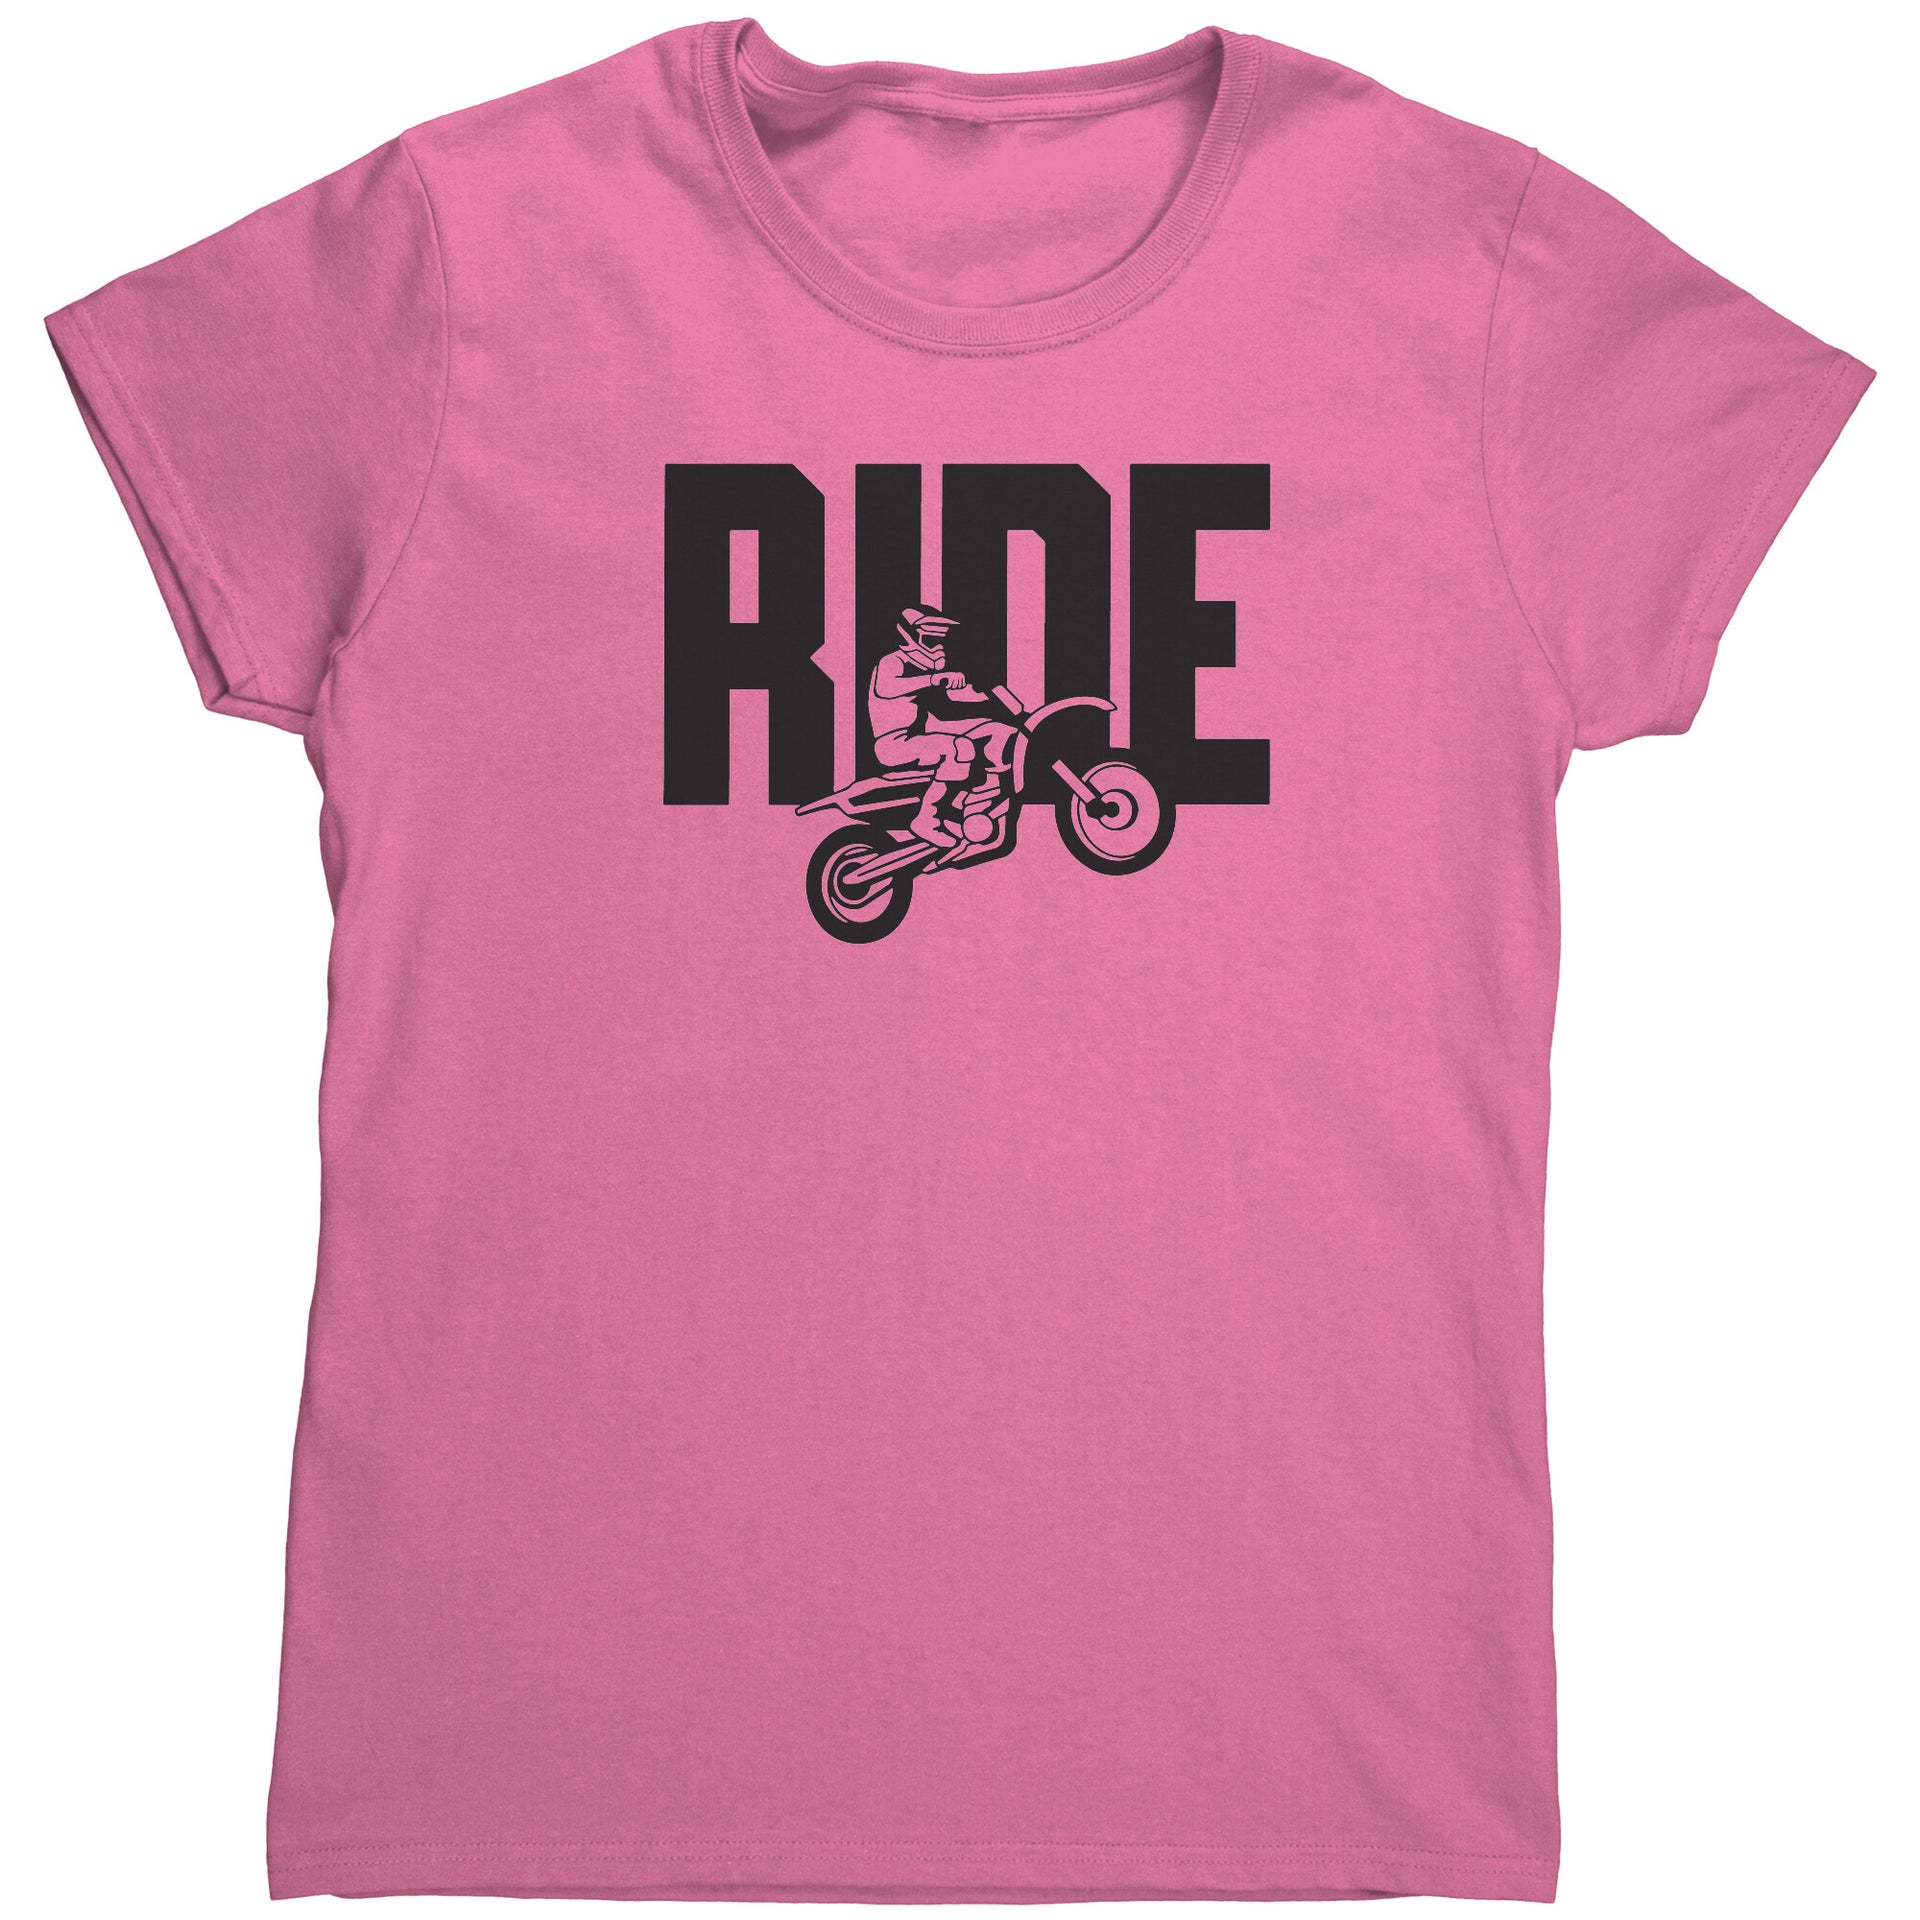 Dirt Bike T-shirts